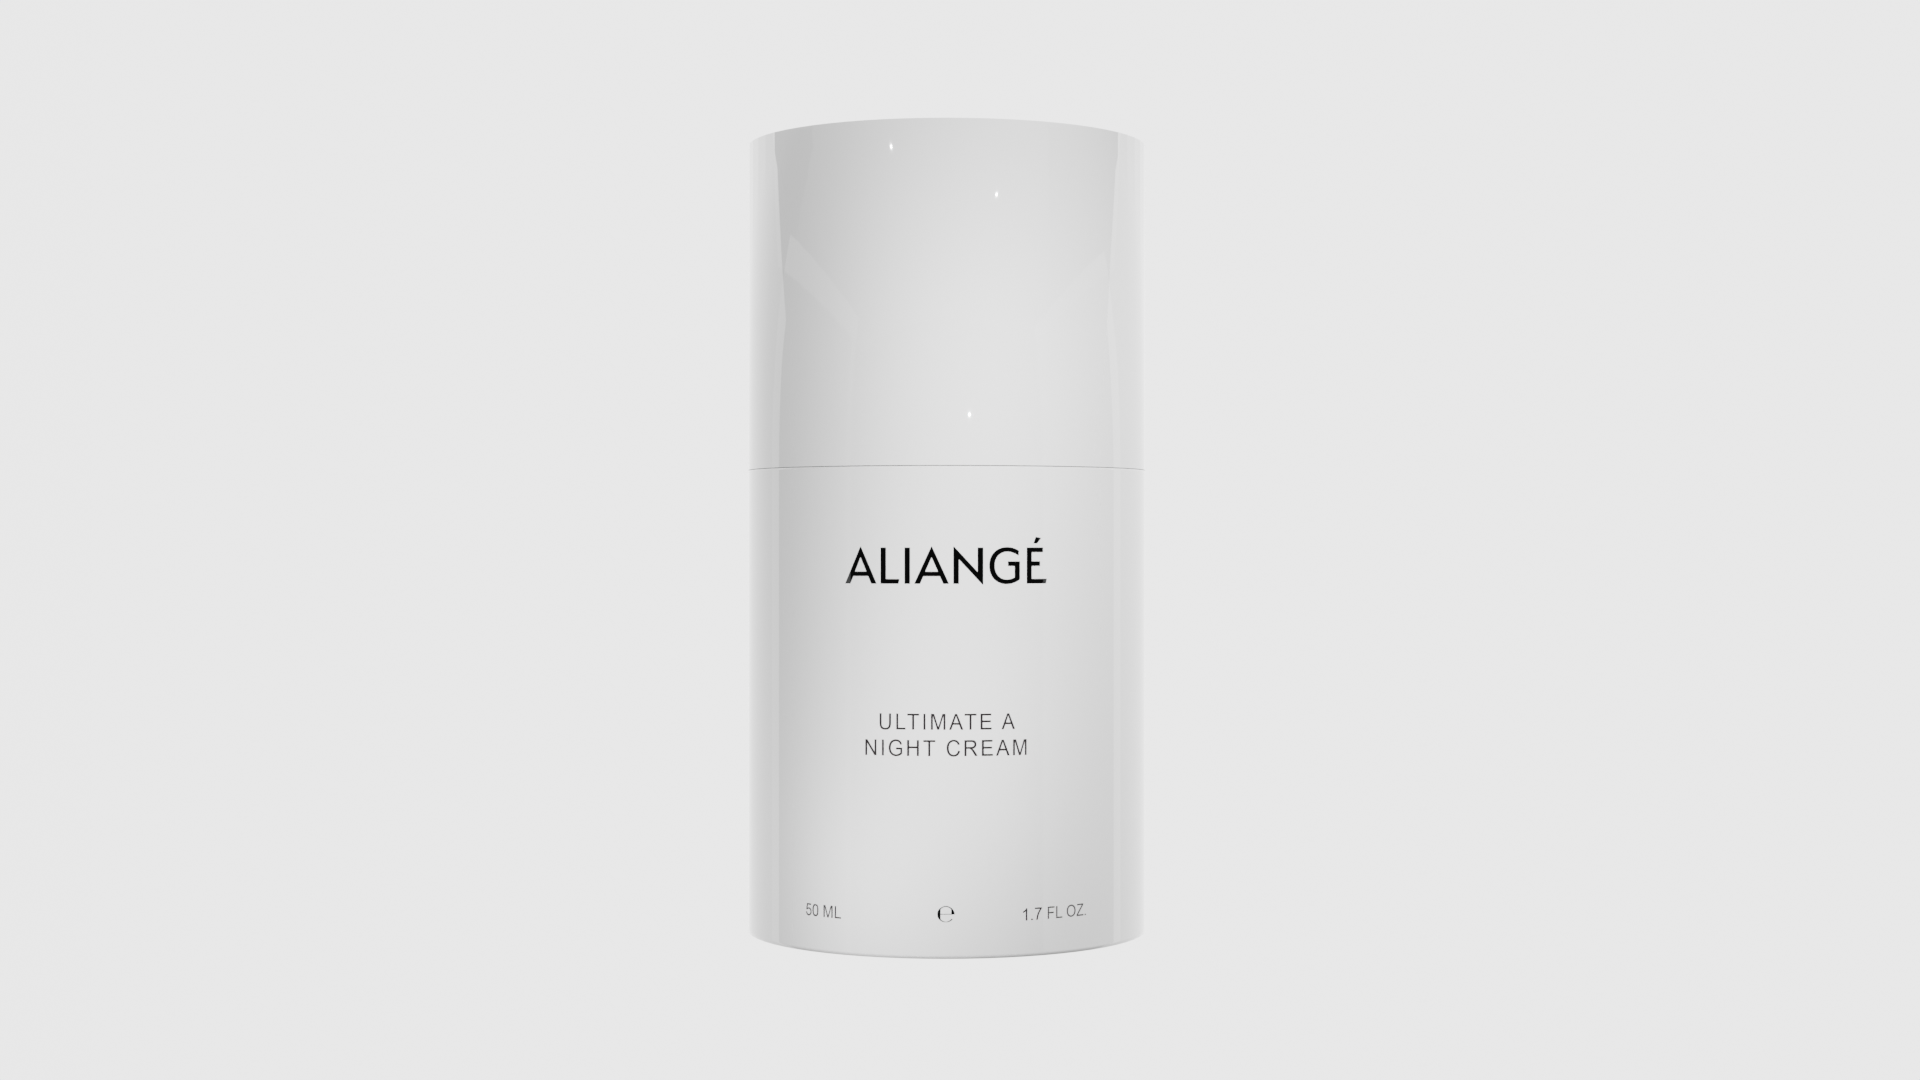 Encapsulated Retinol in the Aliangé Ultimate A Night Cream